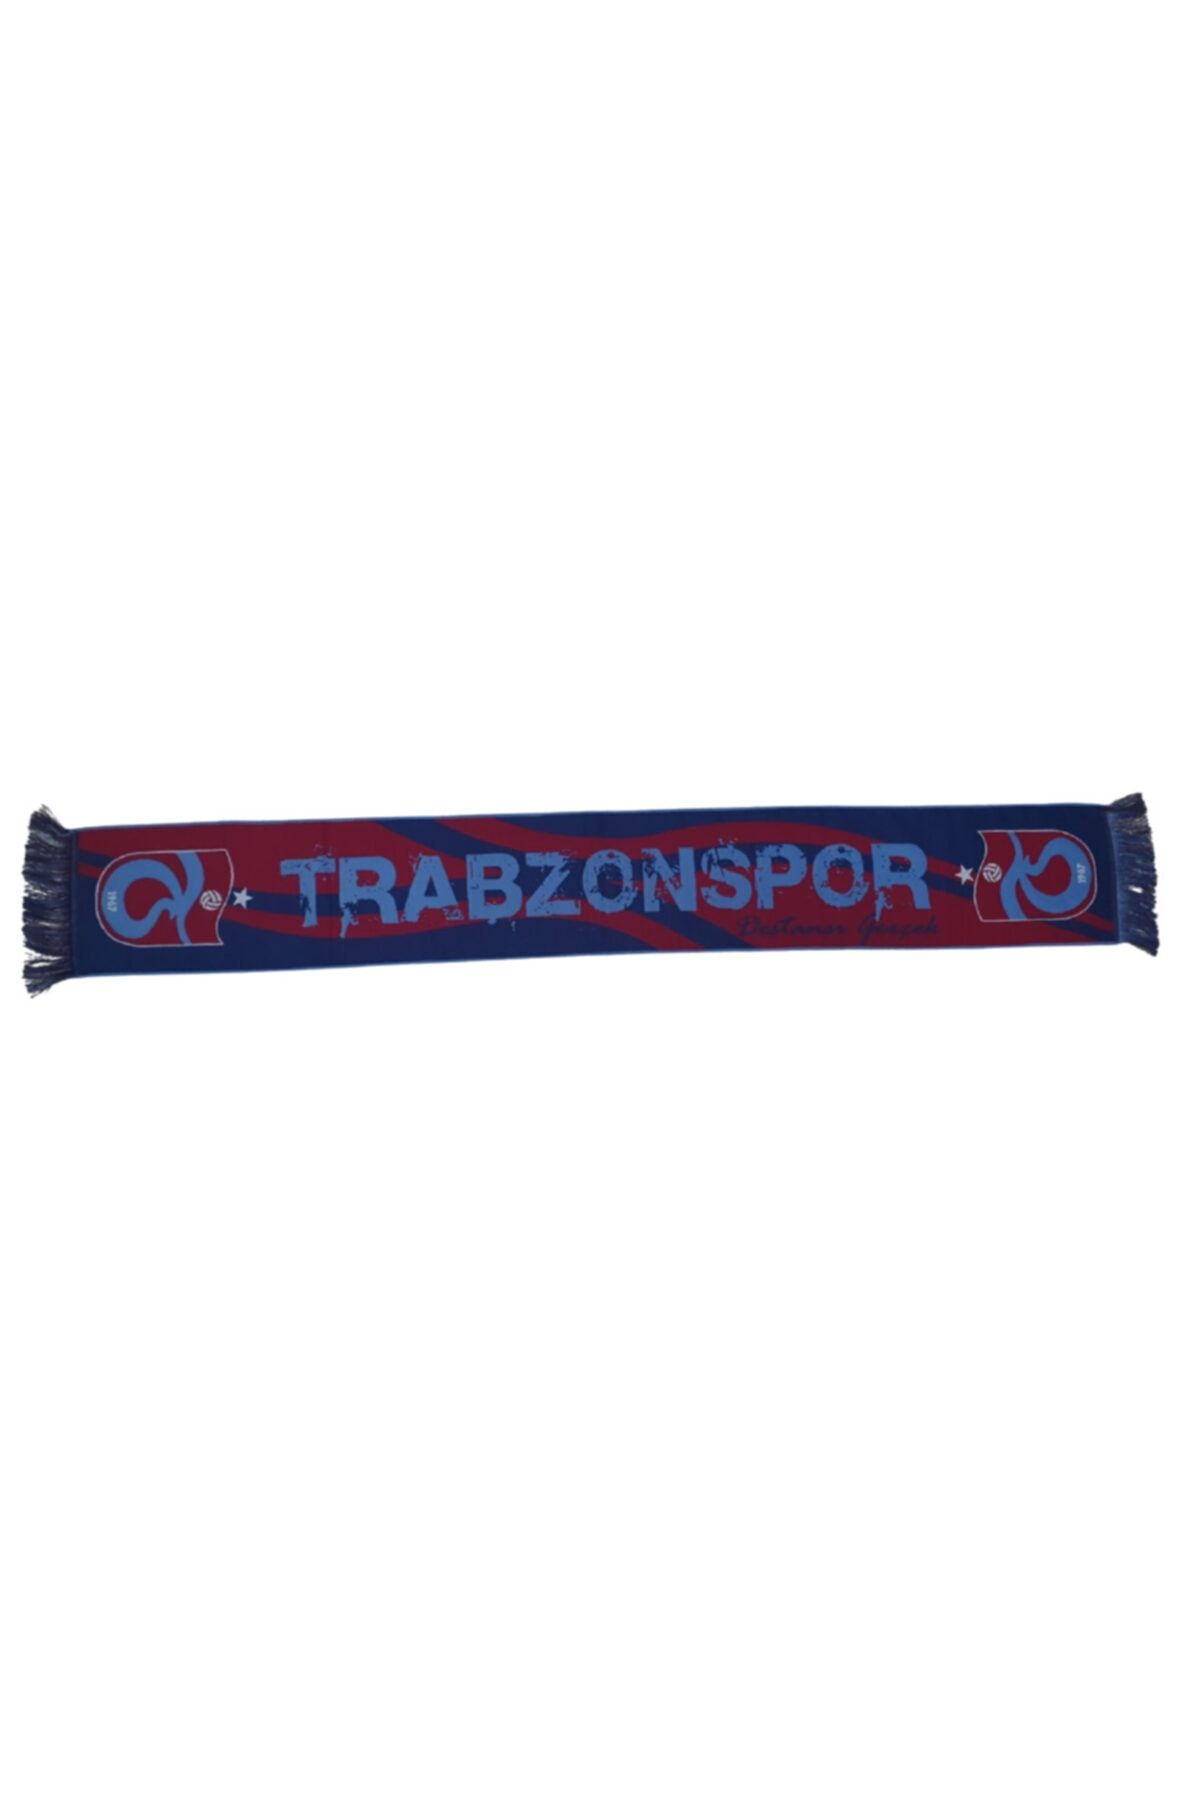 Trabzonspor Unisex Lisanslı Dokuma Atkı